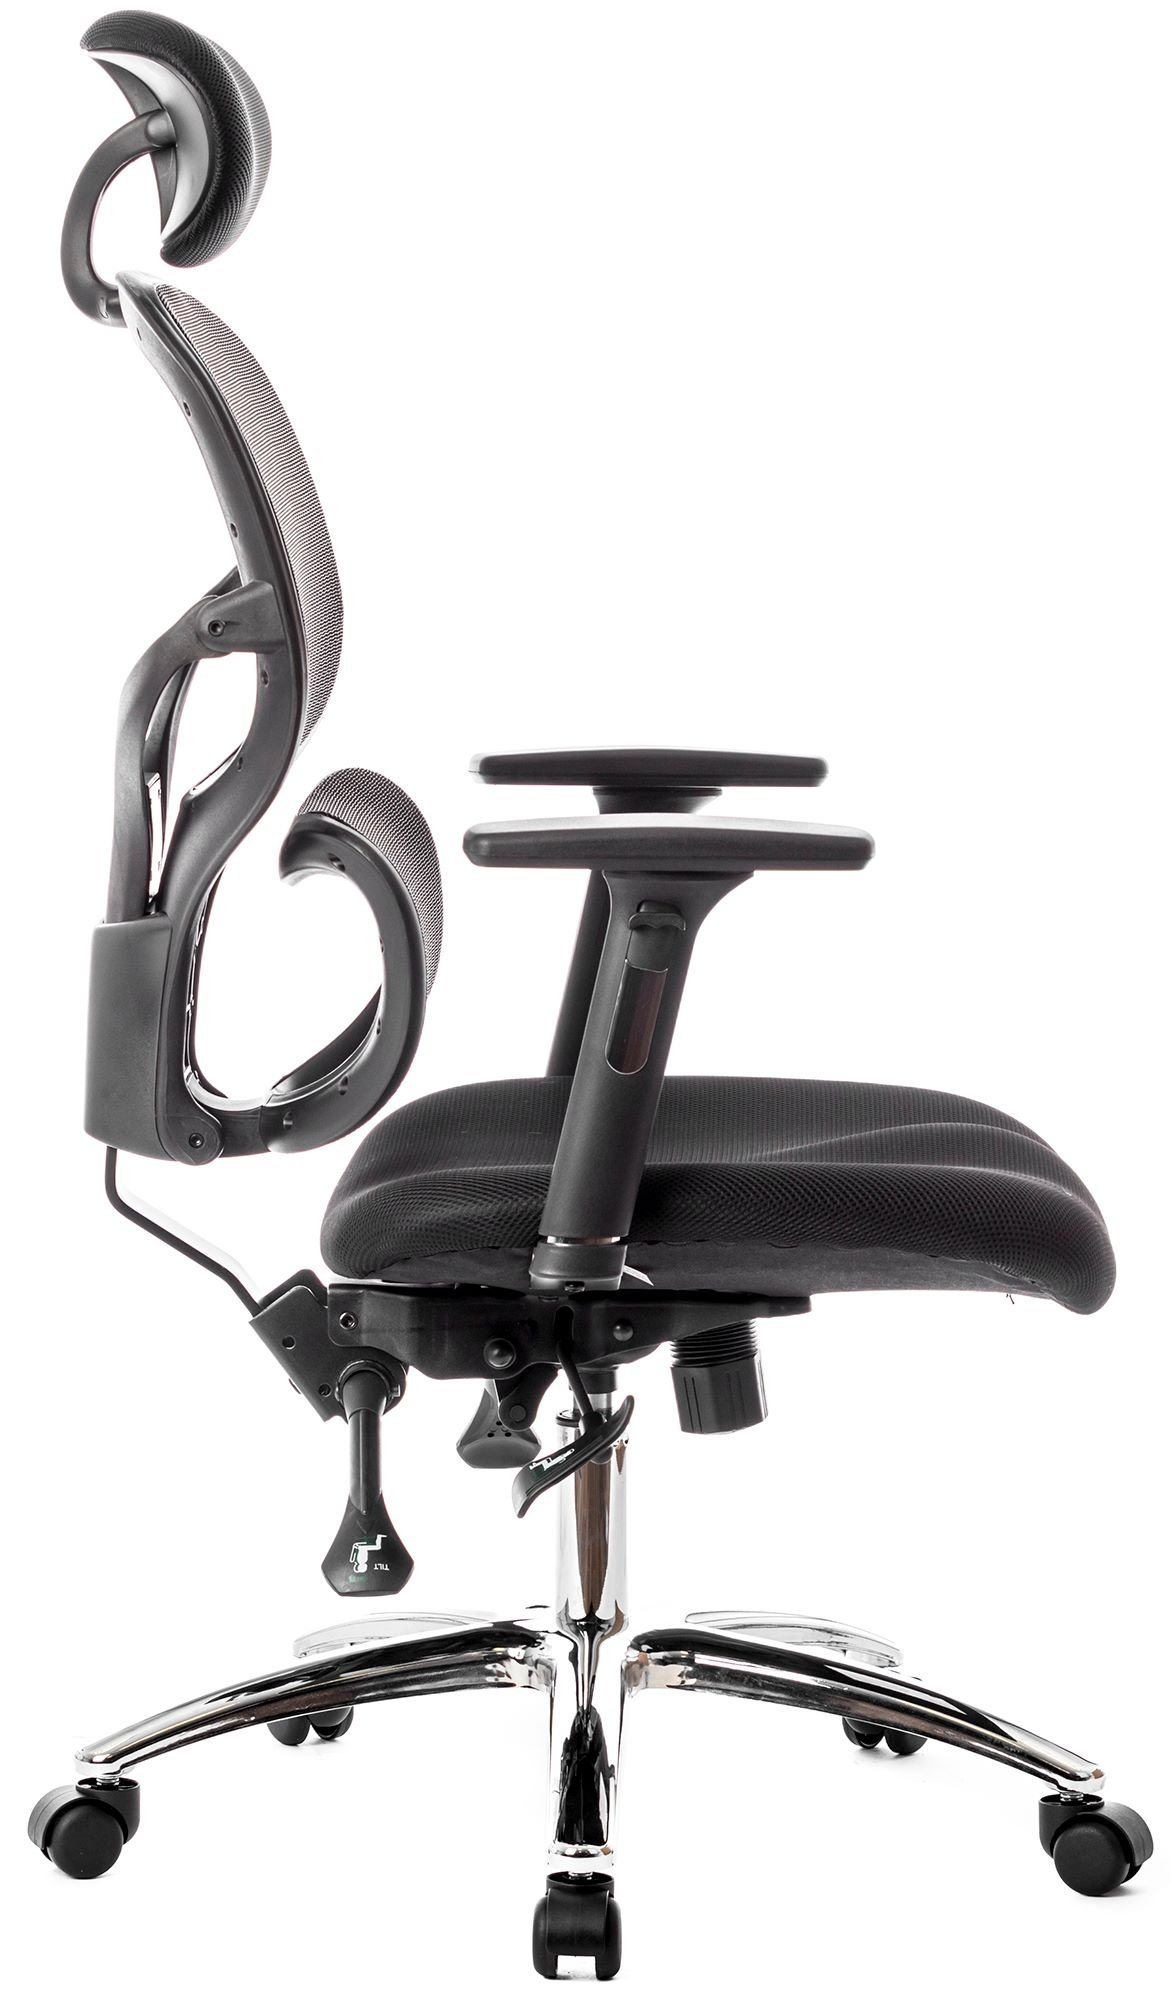 Desire Ergonomic Mesh Office Chair With, Desire Ergonomic Mesh Office Chair With Headrest